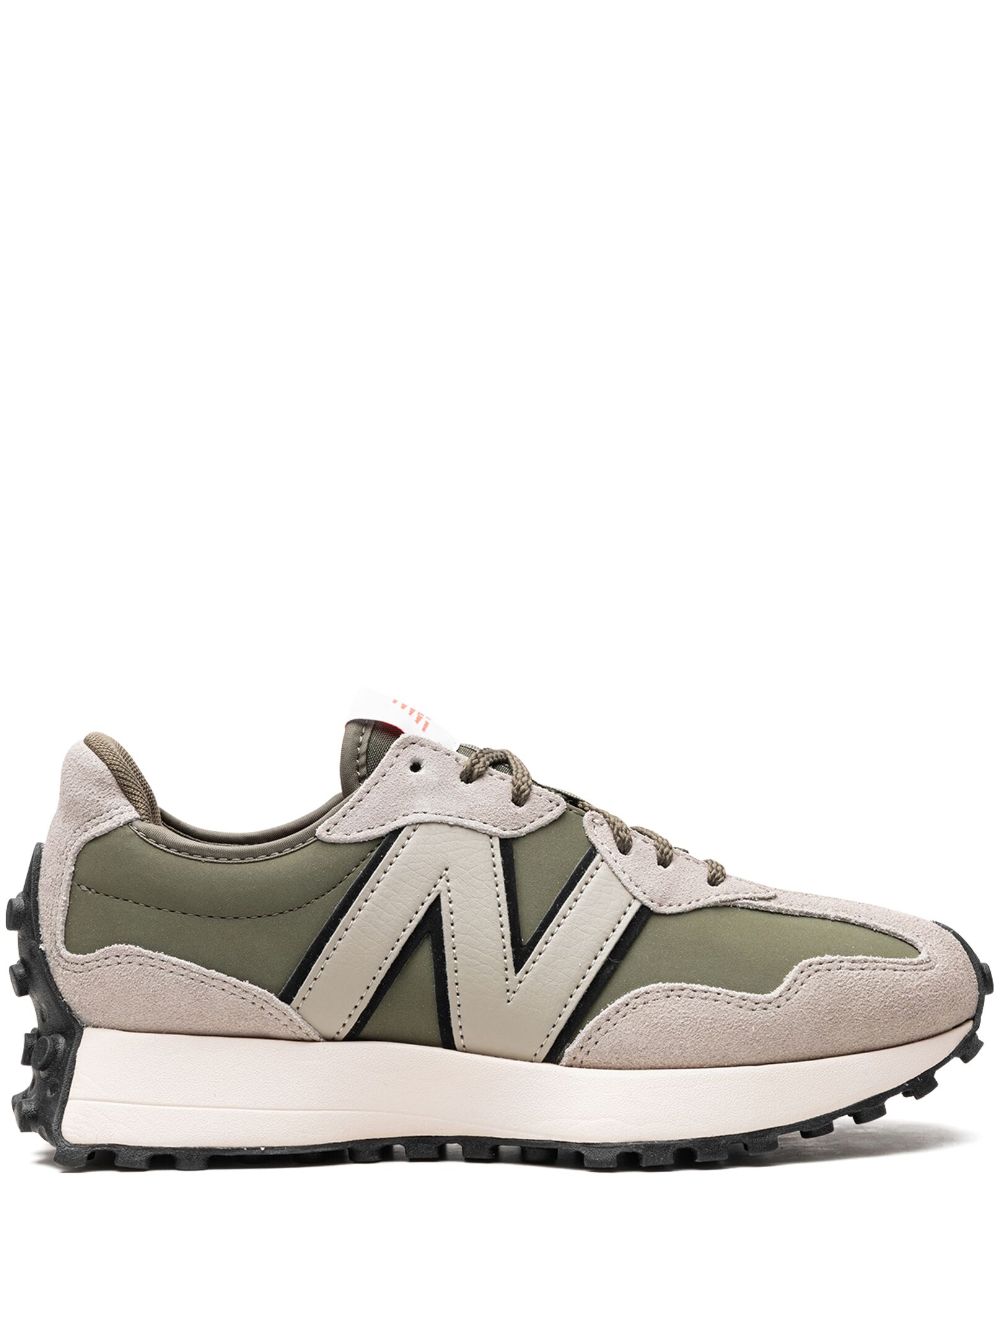 New Balance 327 "Green/Grey" sneakers - Neutrals